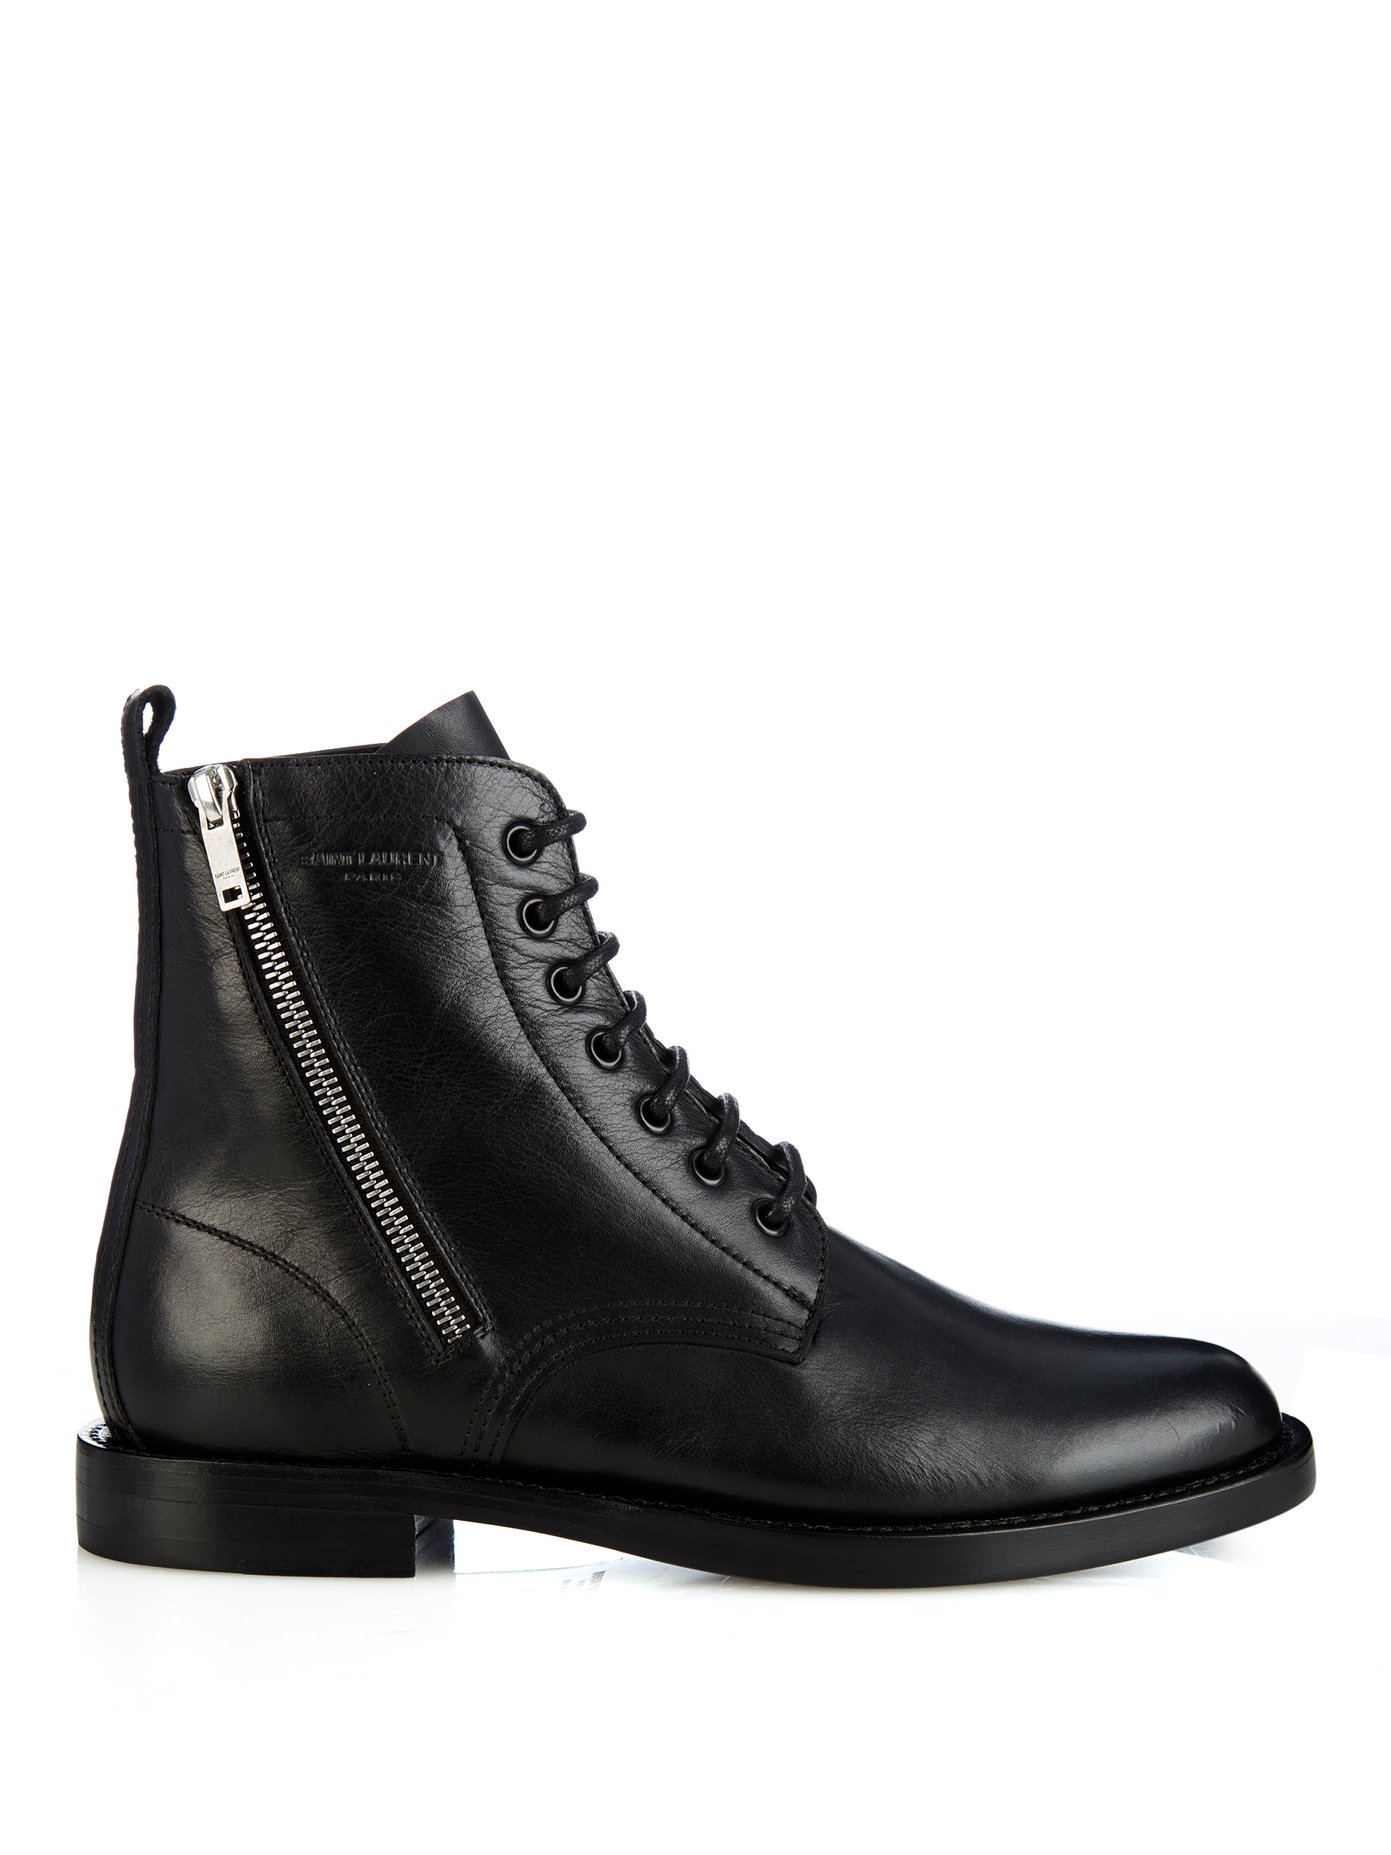 black leather biker ankle boots